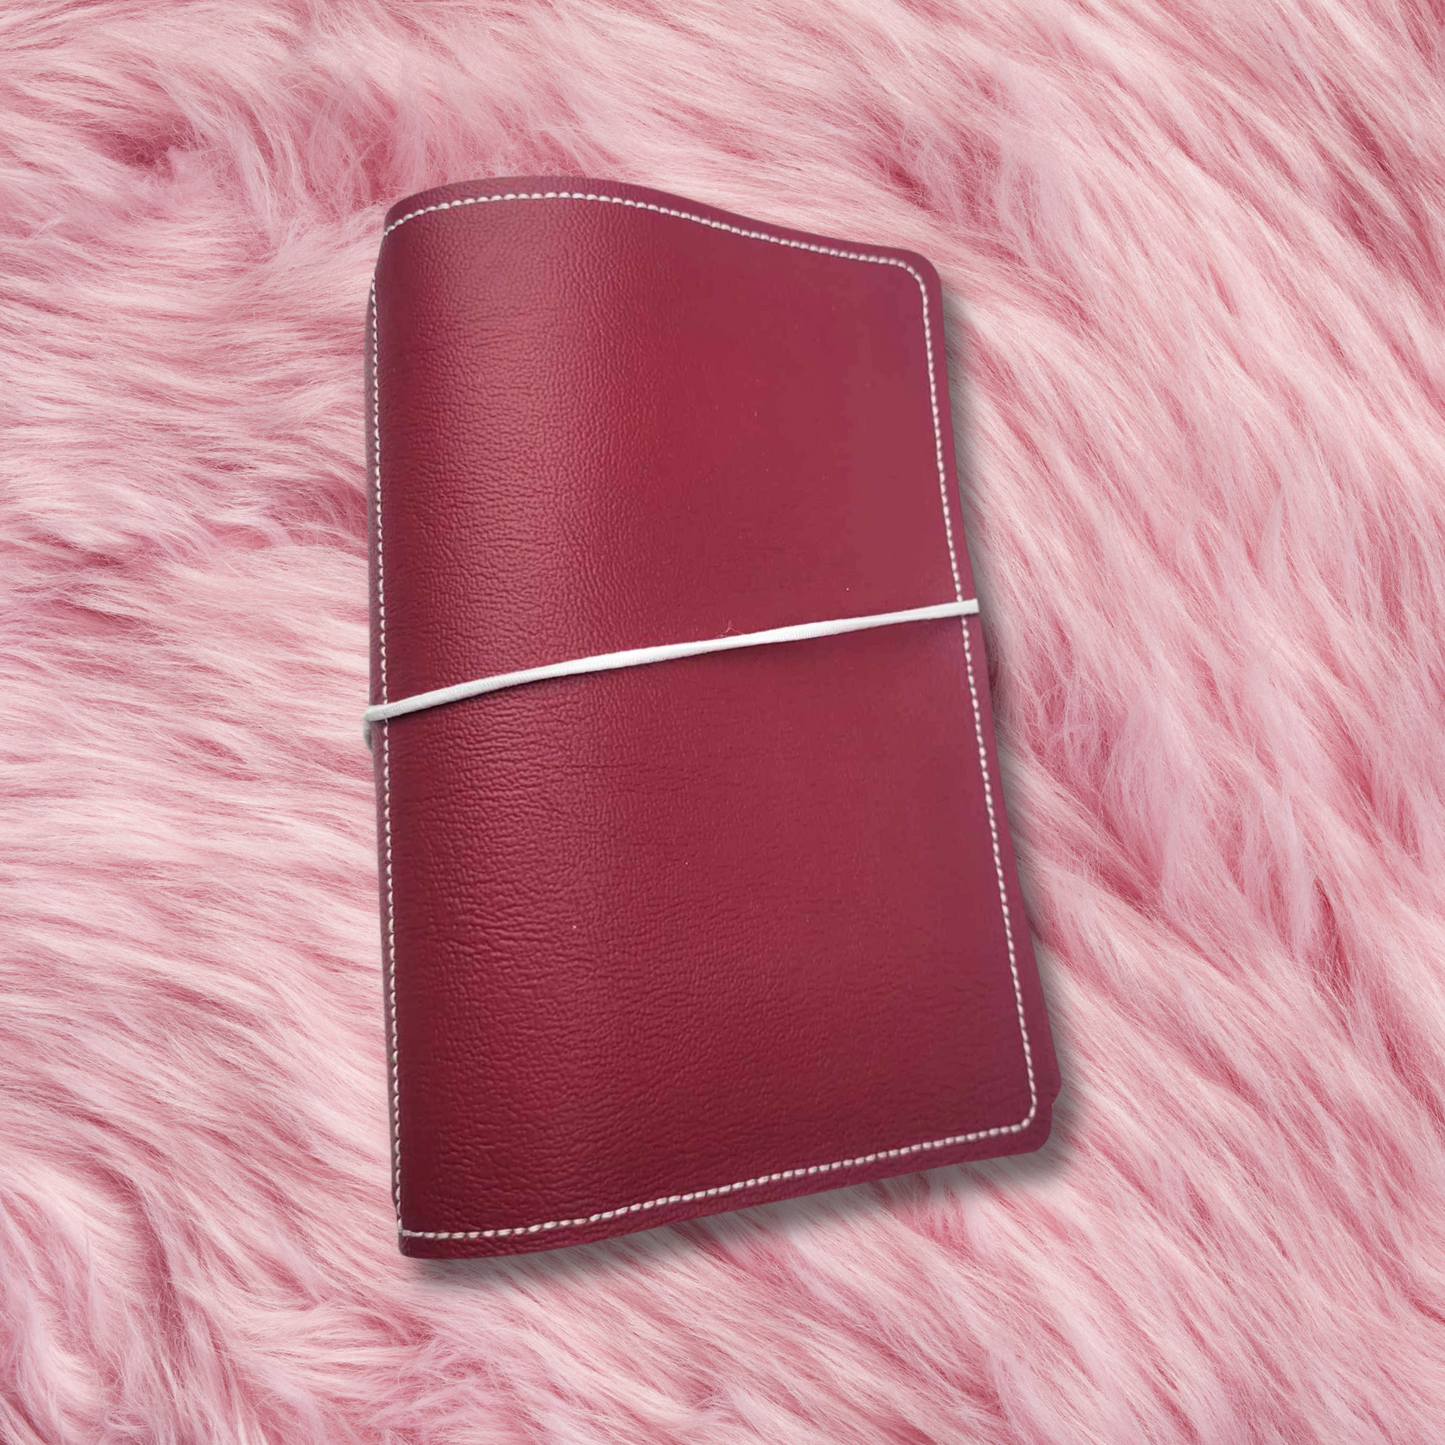 A6 Sized Handmade Traveler's Notebook - Brick Red w/ White Strings